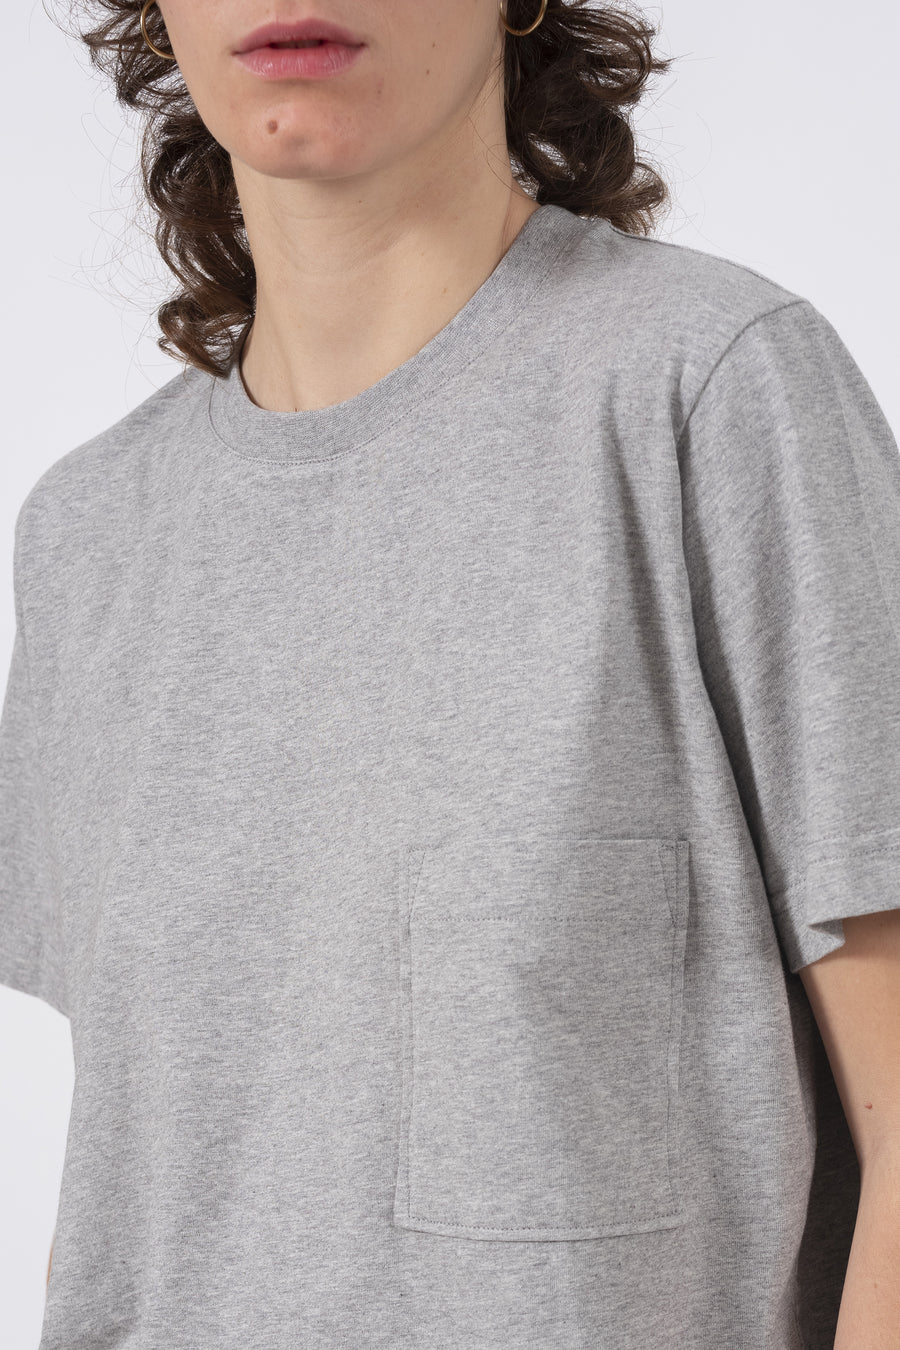 t-shirt tee gris chiné marl grey molleton fleece coton organique organic cotton gots portugal